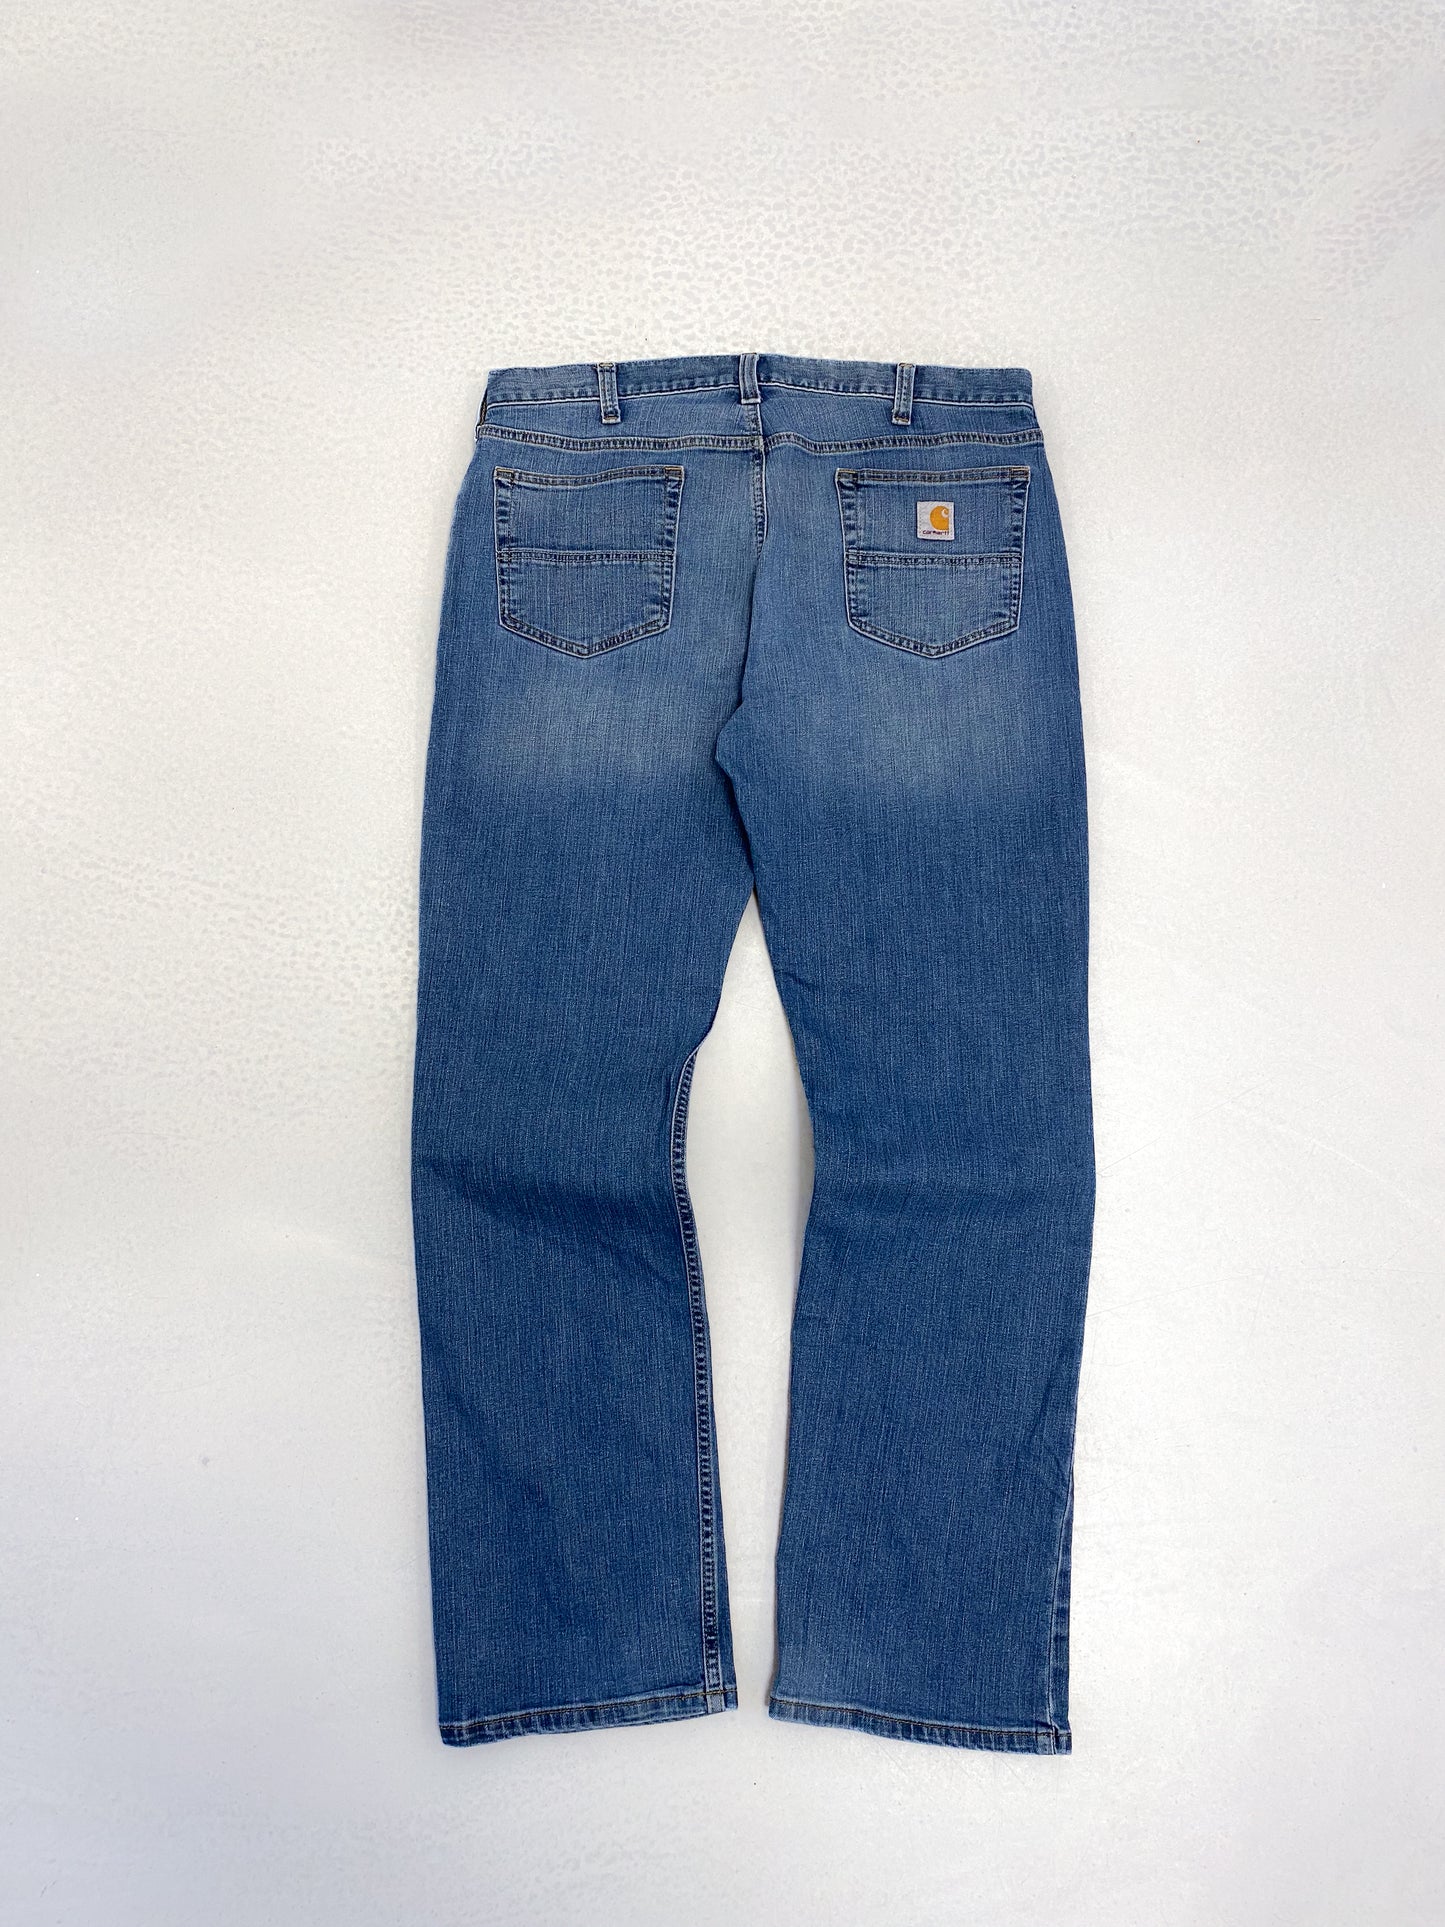 Carhartt bukser (36x32)